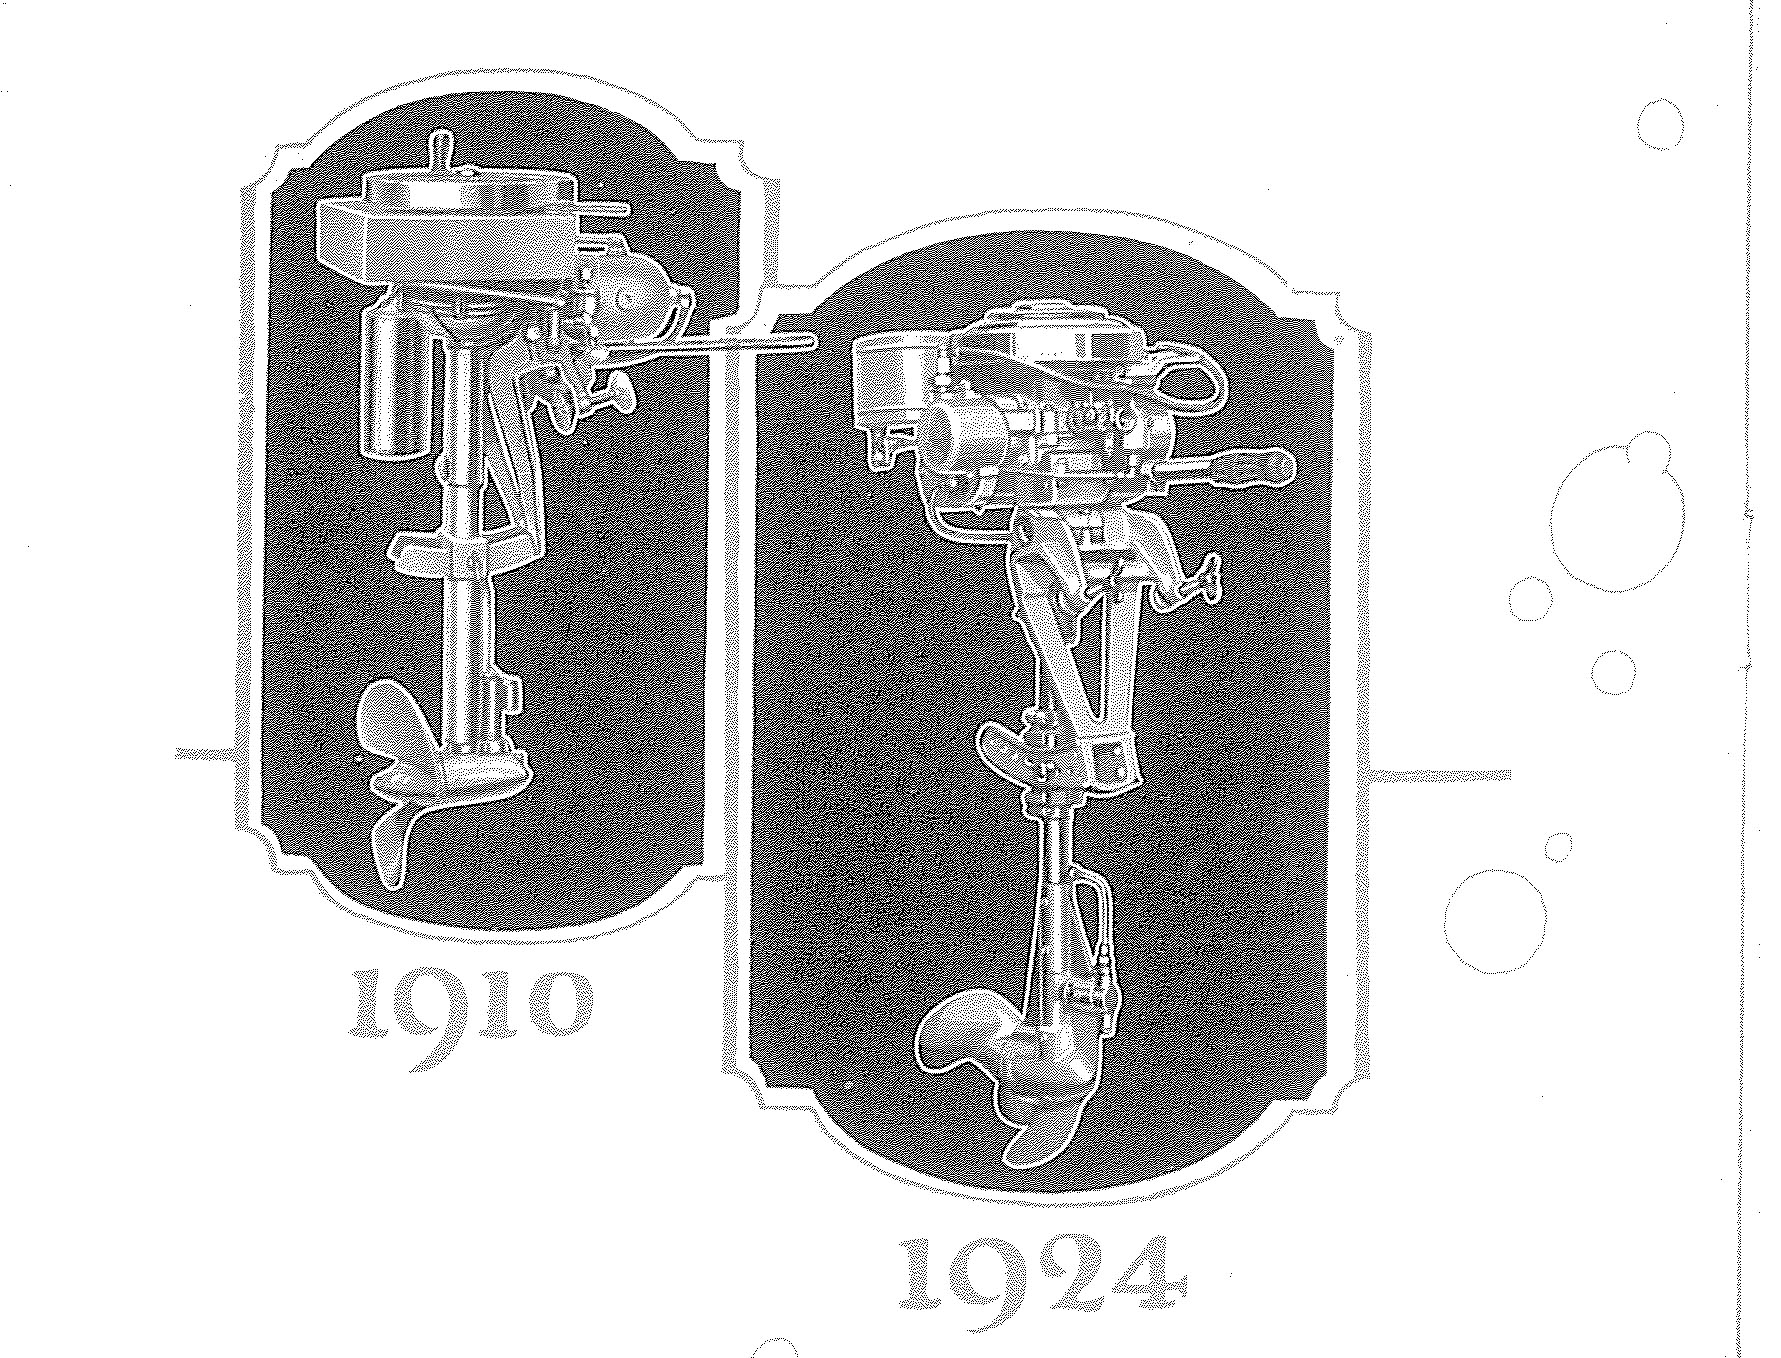 Evinrude’s 1910 and 1924 motors. 